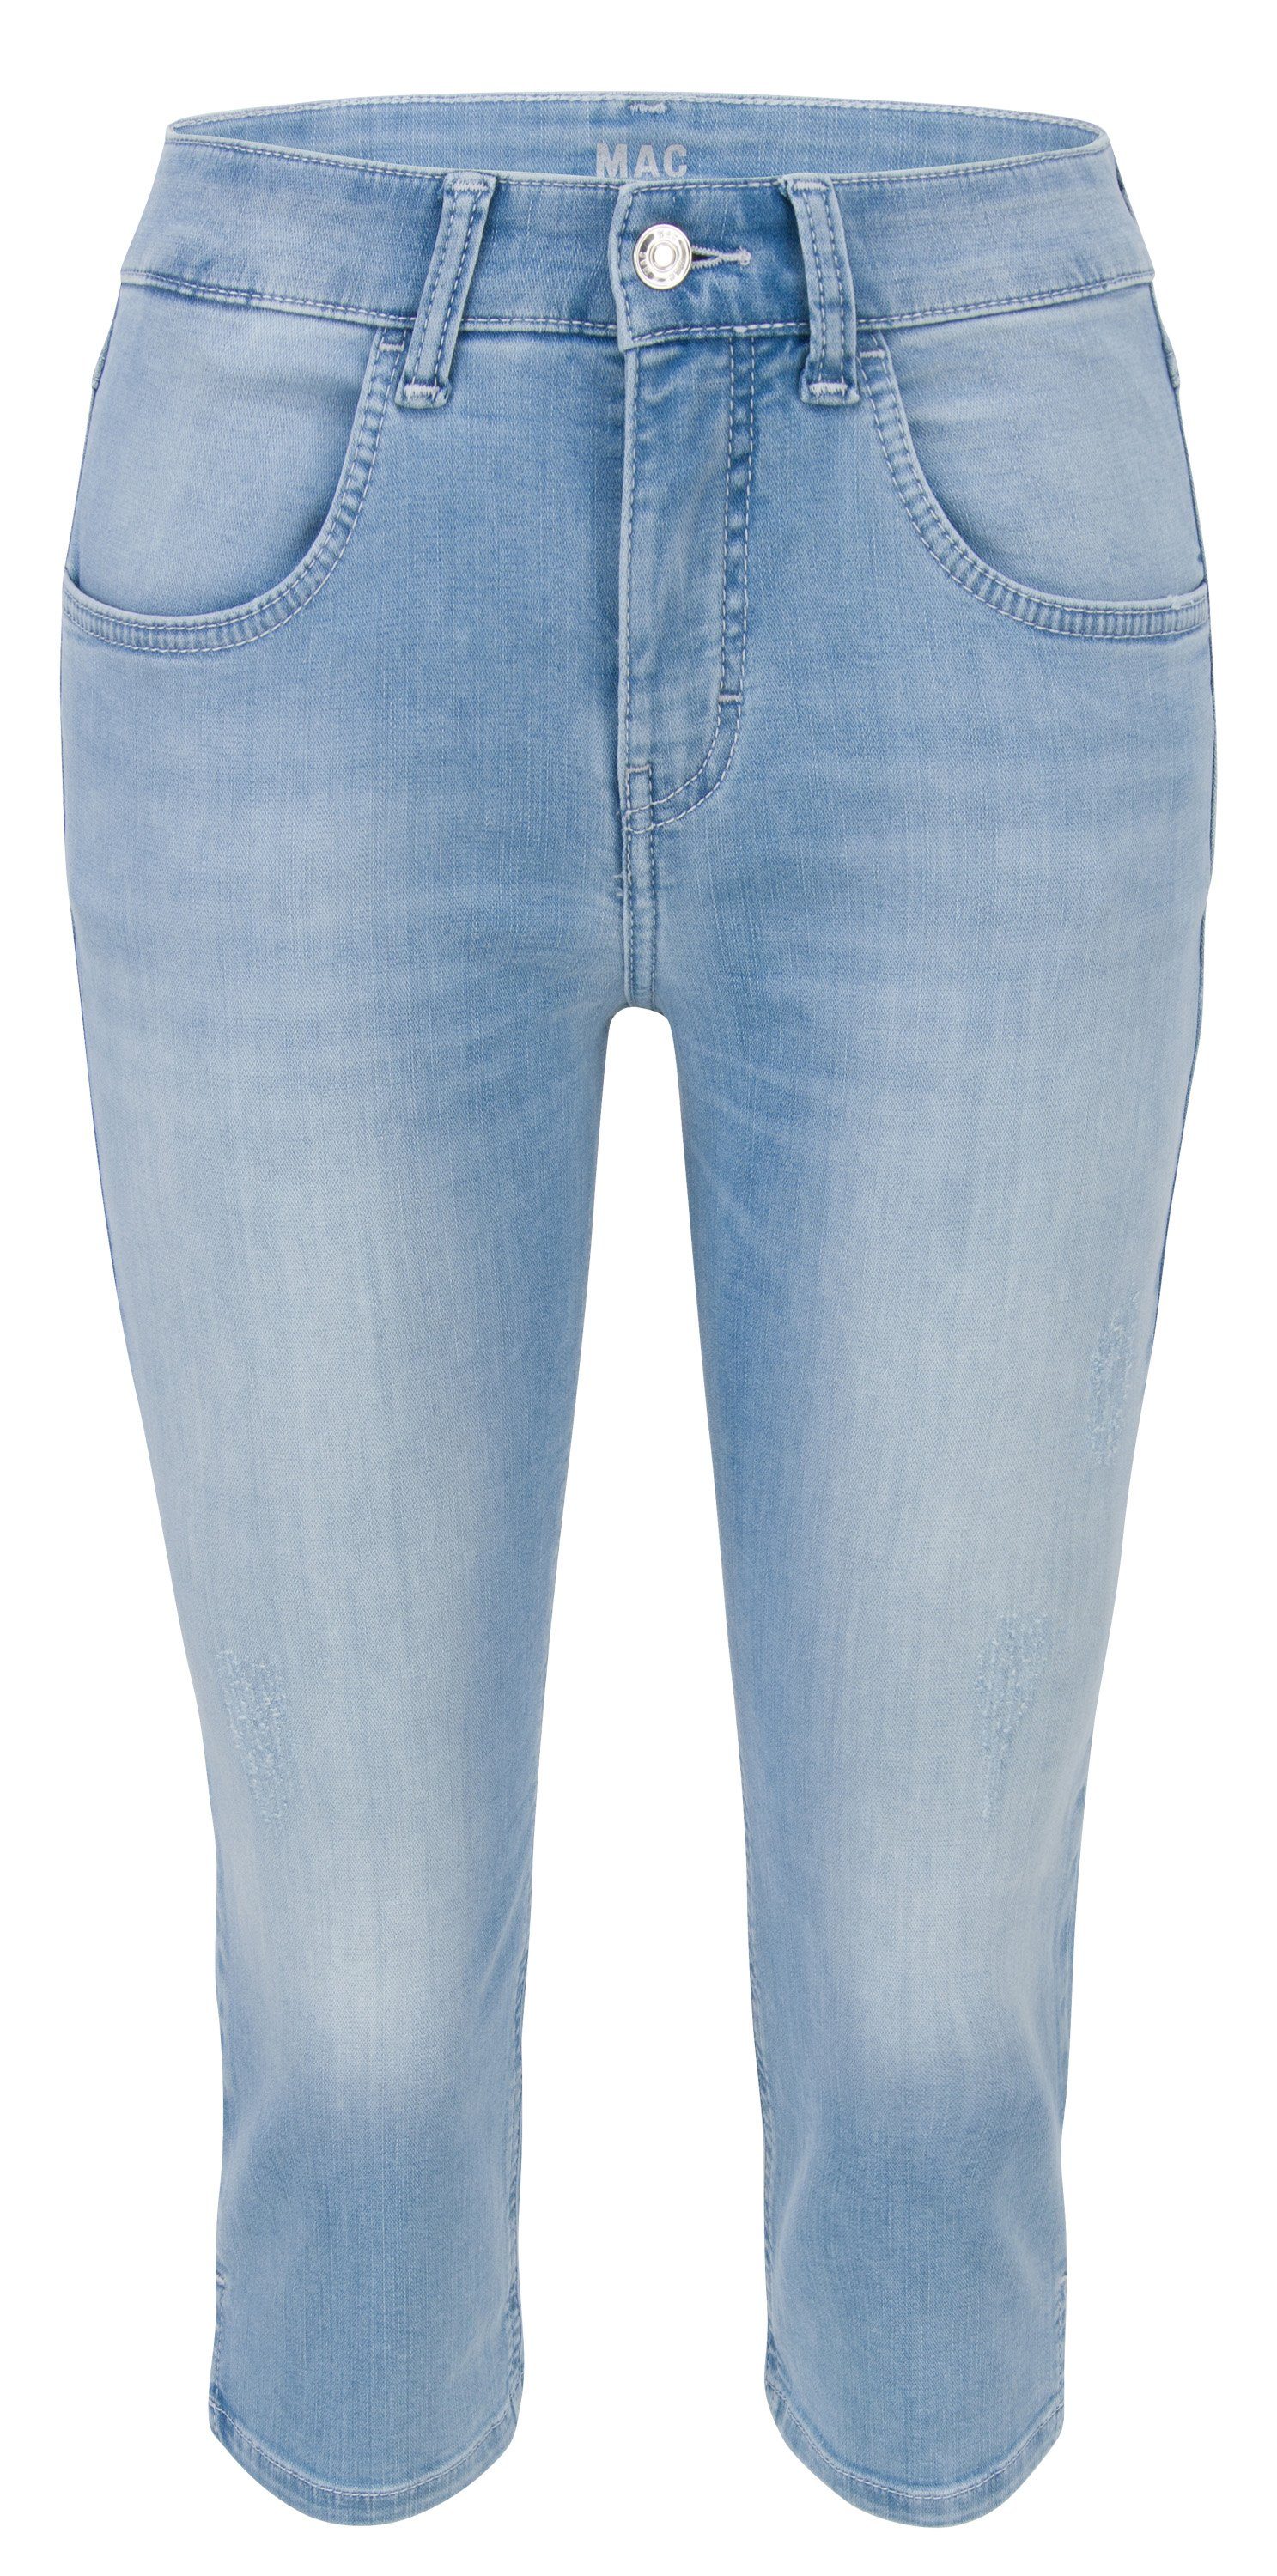 MAC Stretch-Jeans D426 light MAC grinded 5917-90-0394 CAPRI wash blue